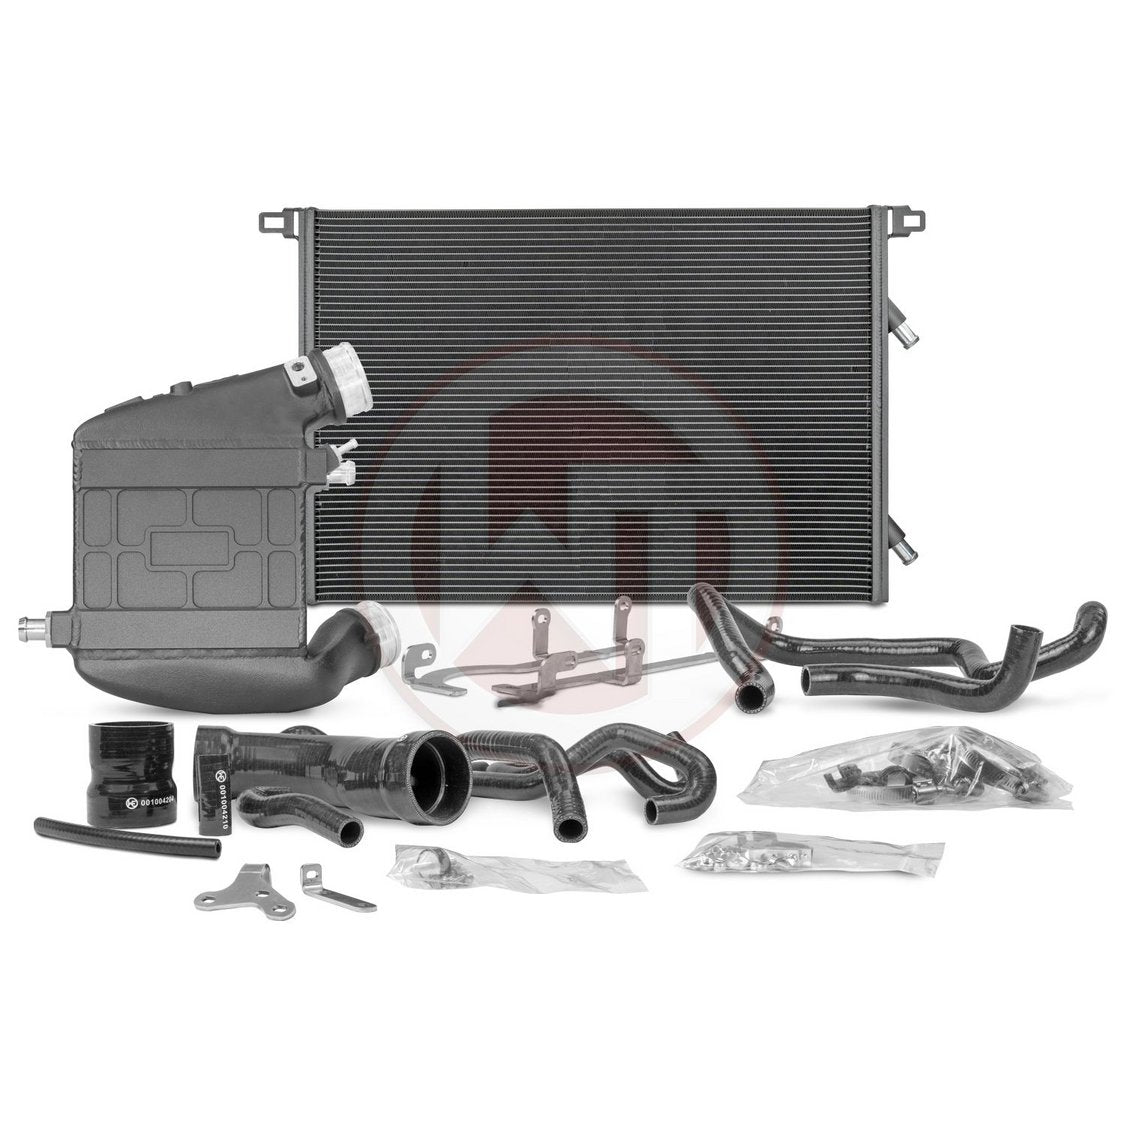 2017 RS4 B9 331KW/450PS Intercooler Upgrade Kit and the Radiator Upgrade Kit